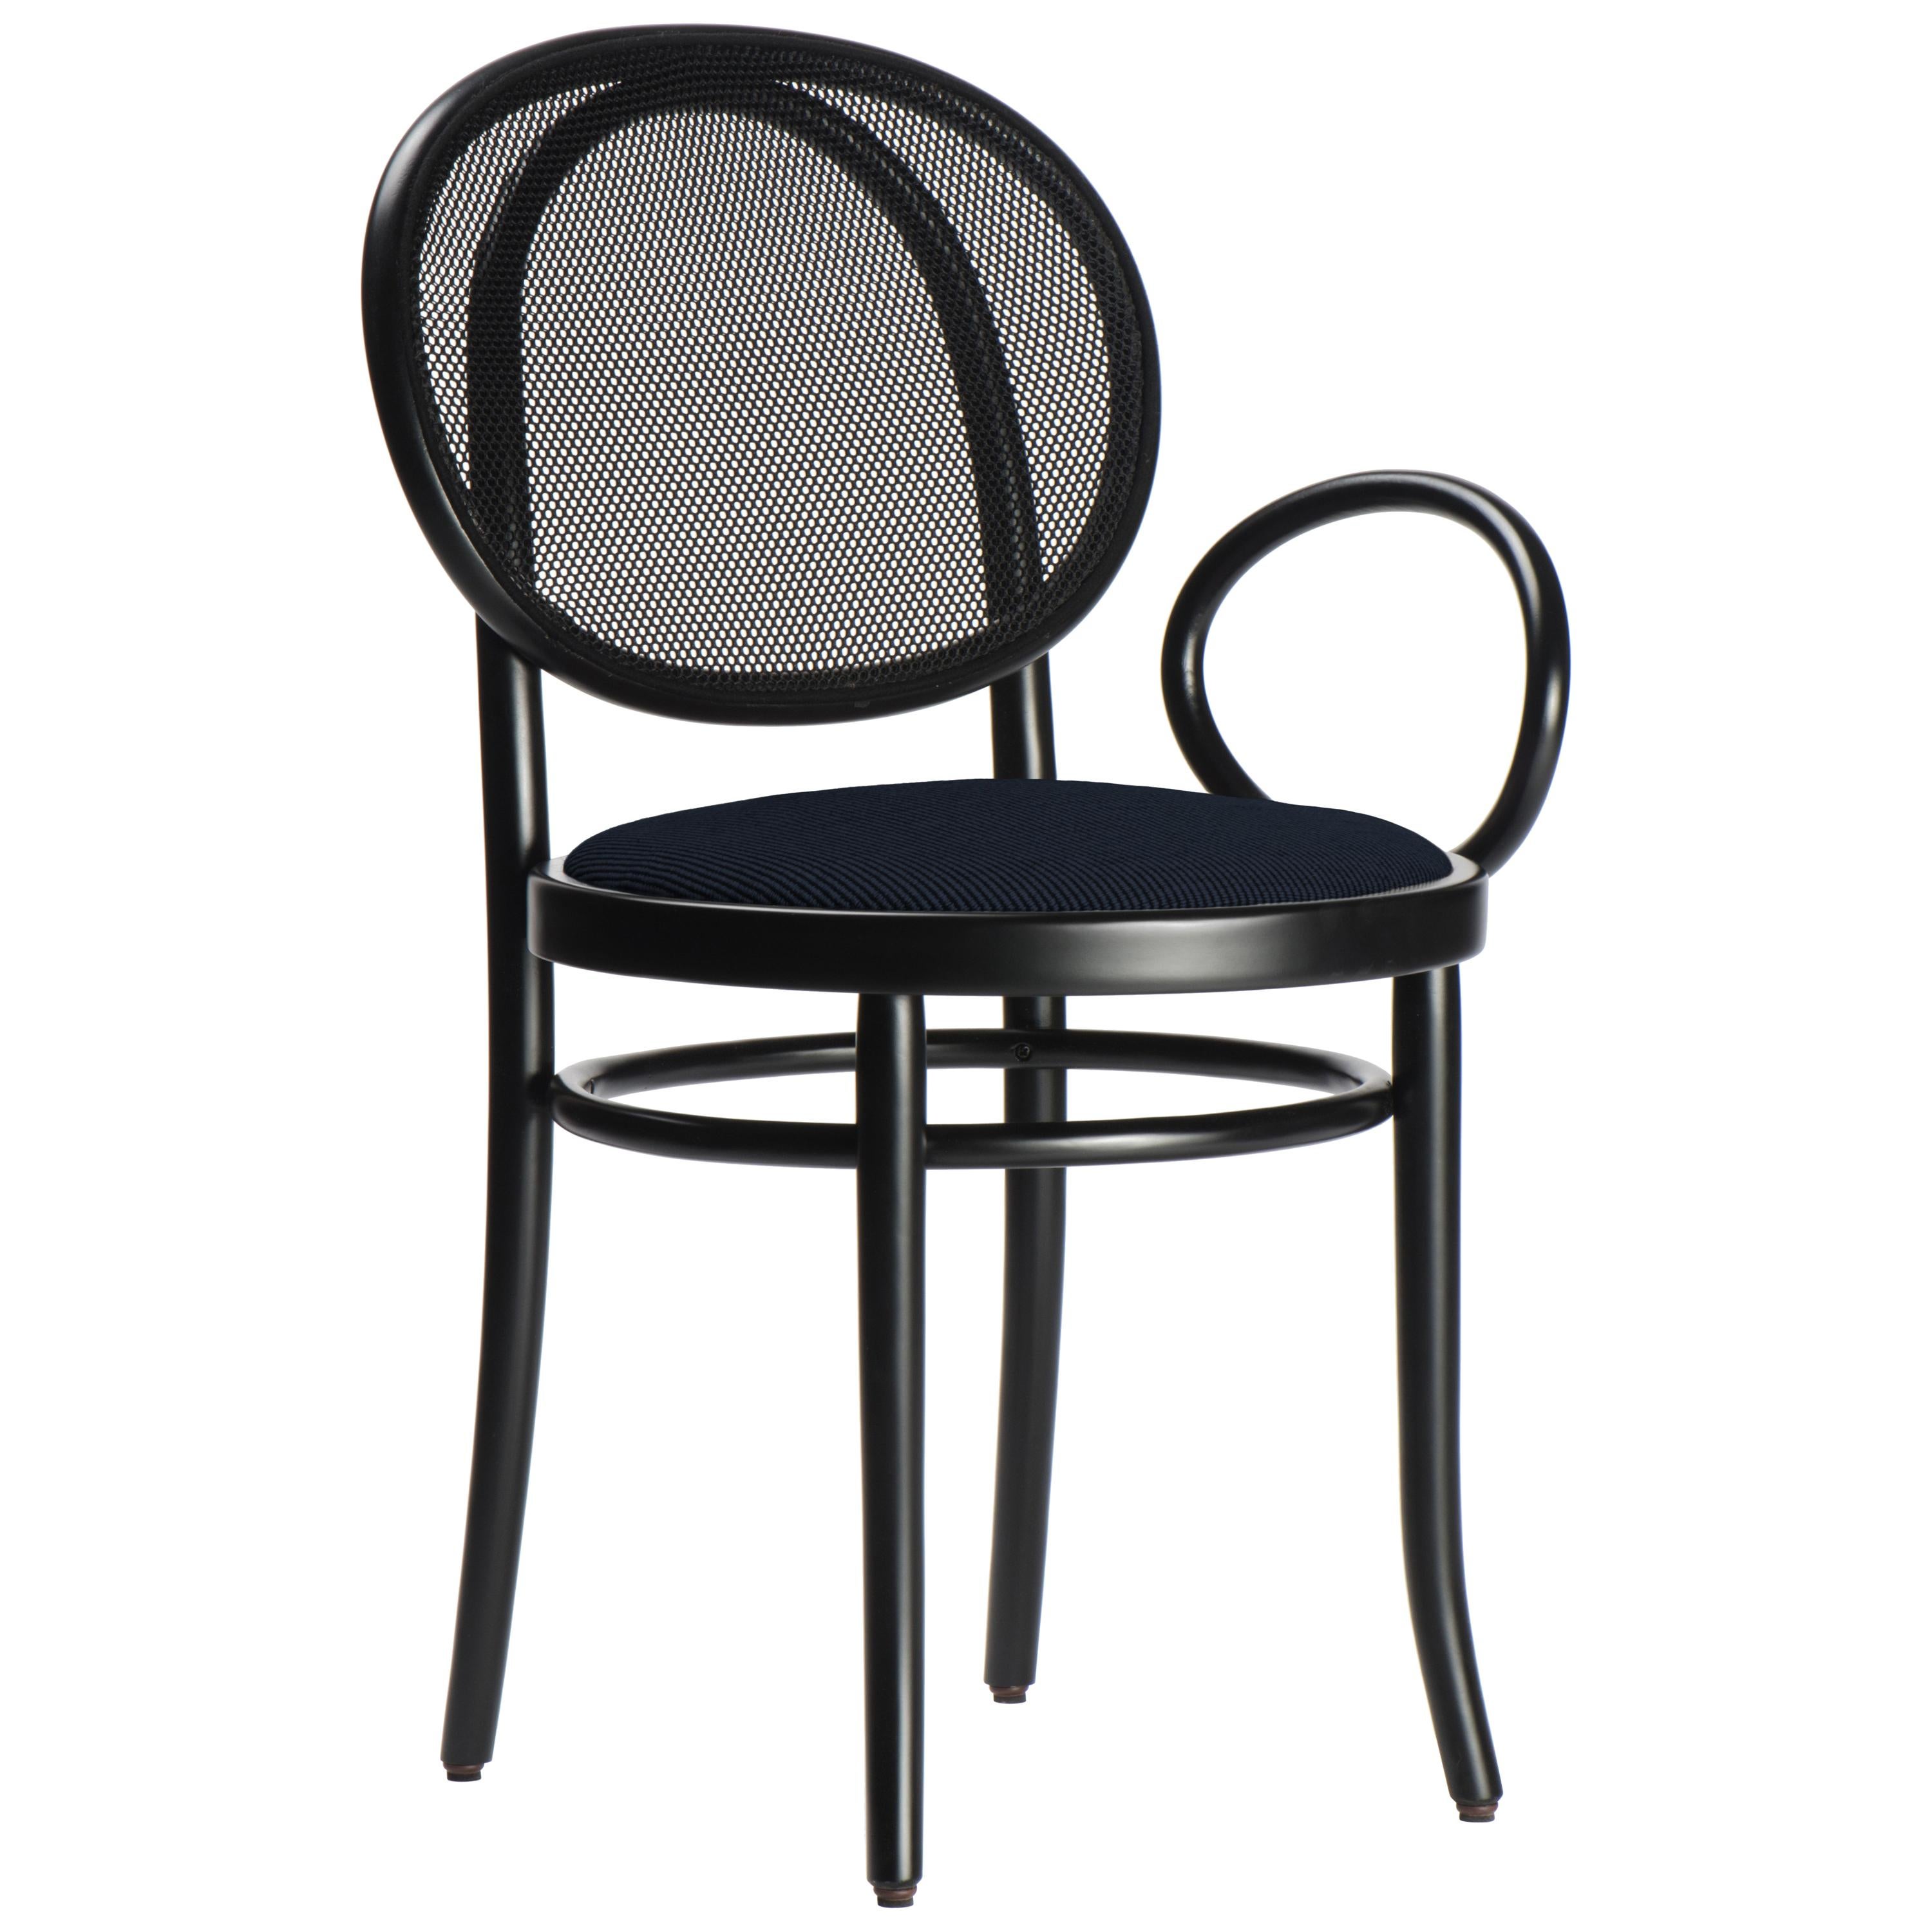 Gebrüder Thonet Vienna GmbH N.0 Single Armrest Black Chair in  Mesh Backrest